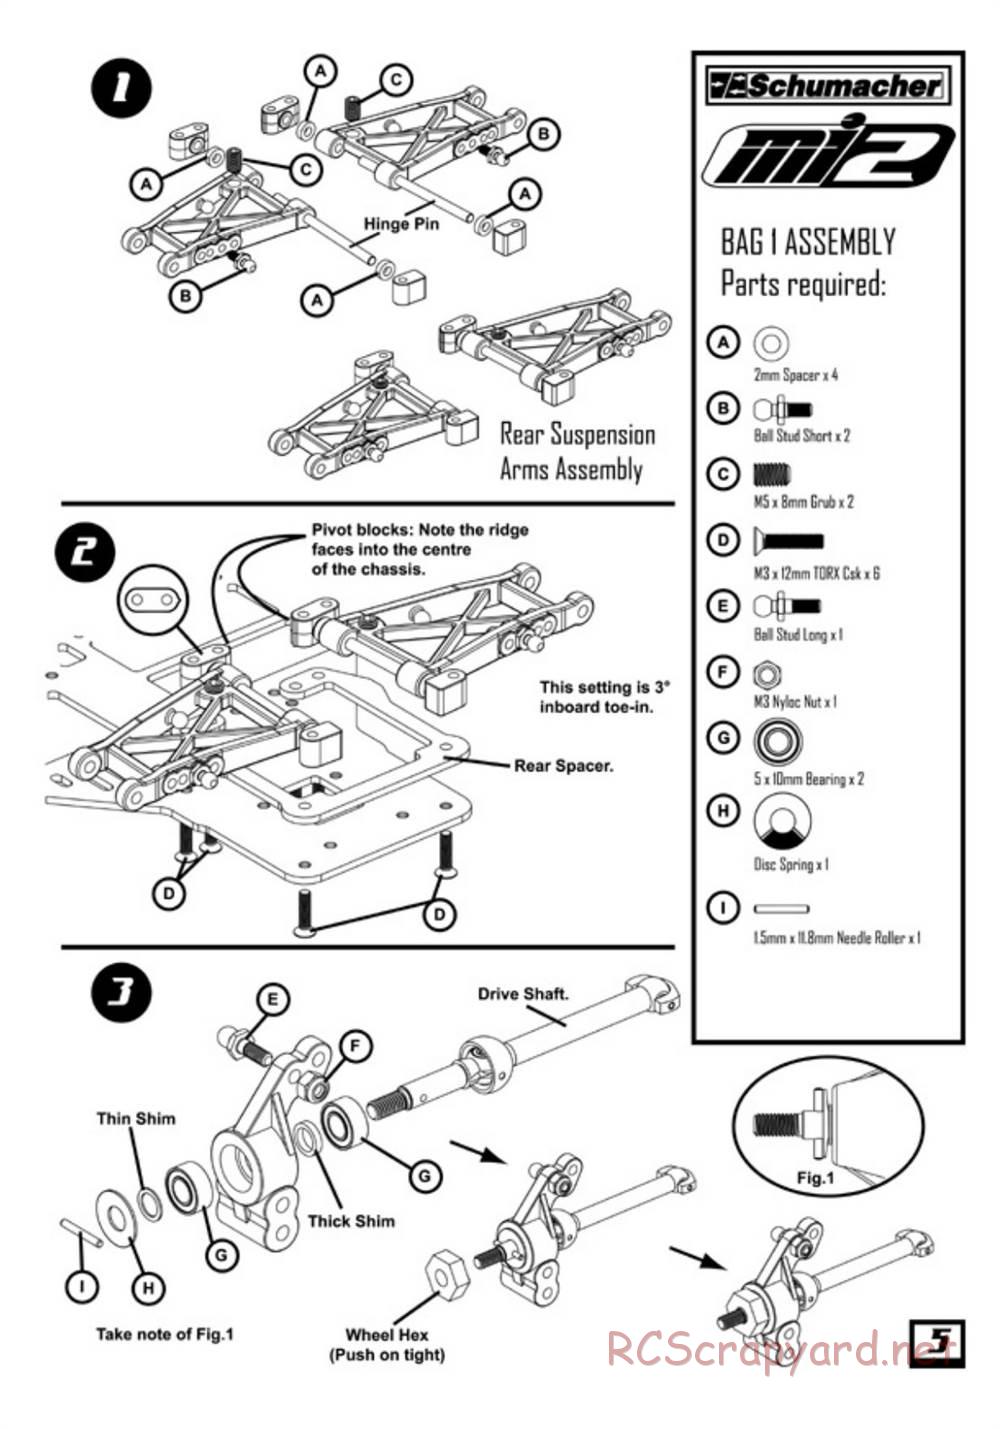 Schumacher - Mi2 - Manual - Page 7